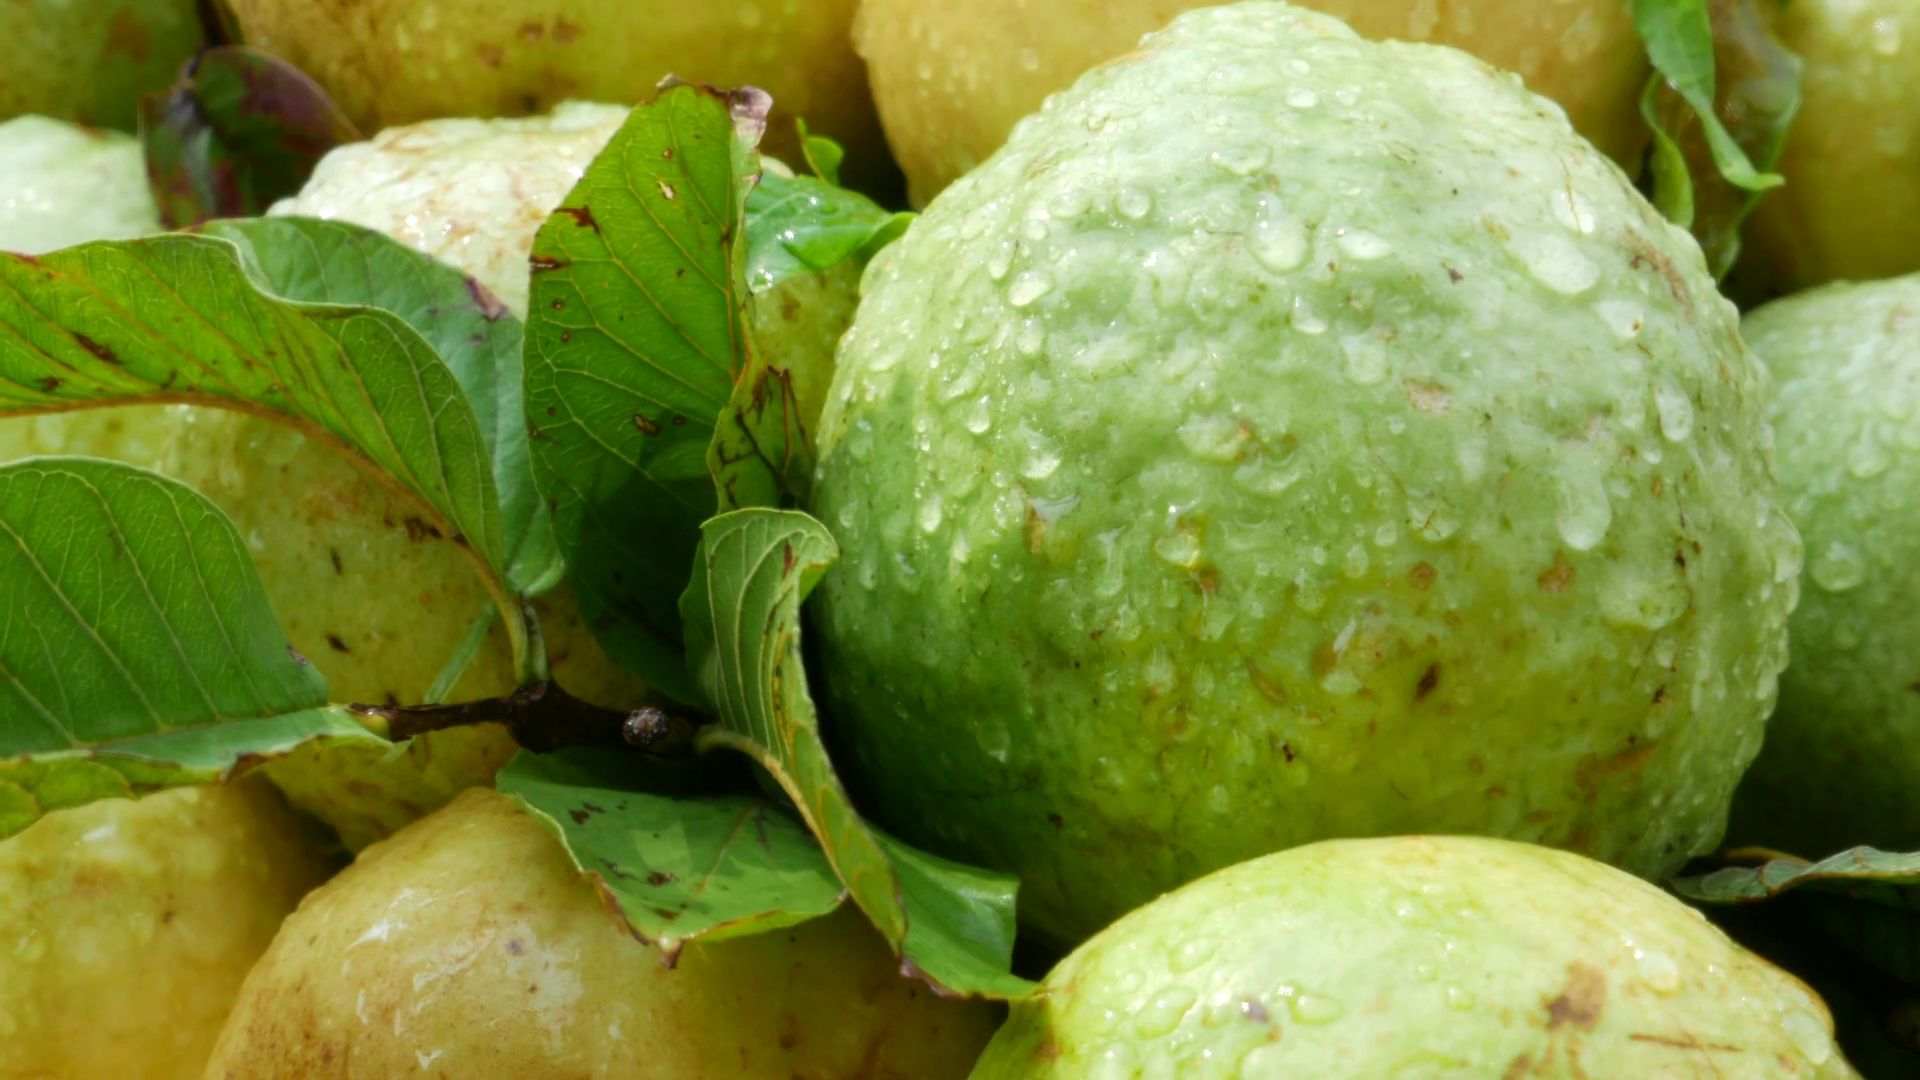 Farm Fresh Guava 4 k Mumbai Indian. Stock Video Footage - Videoblocks